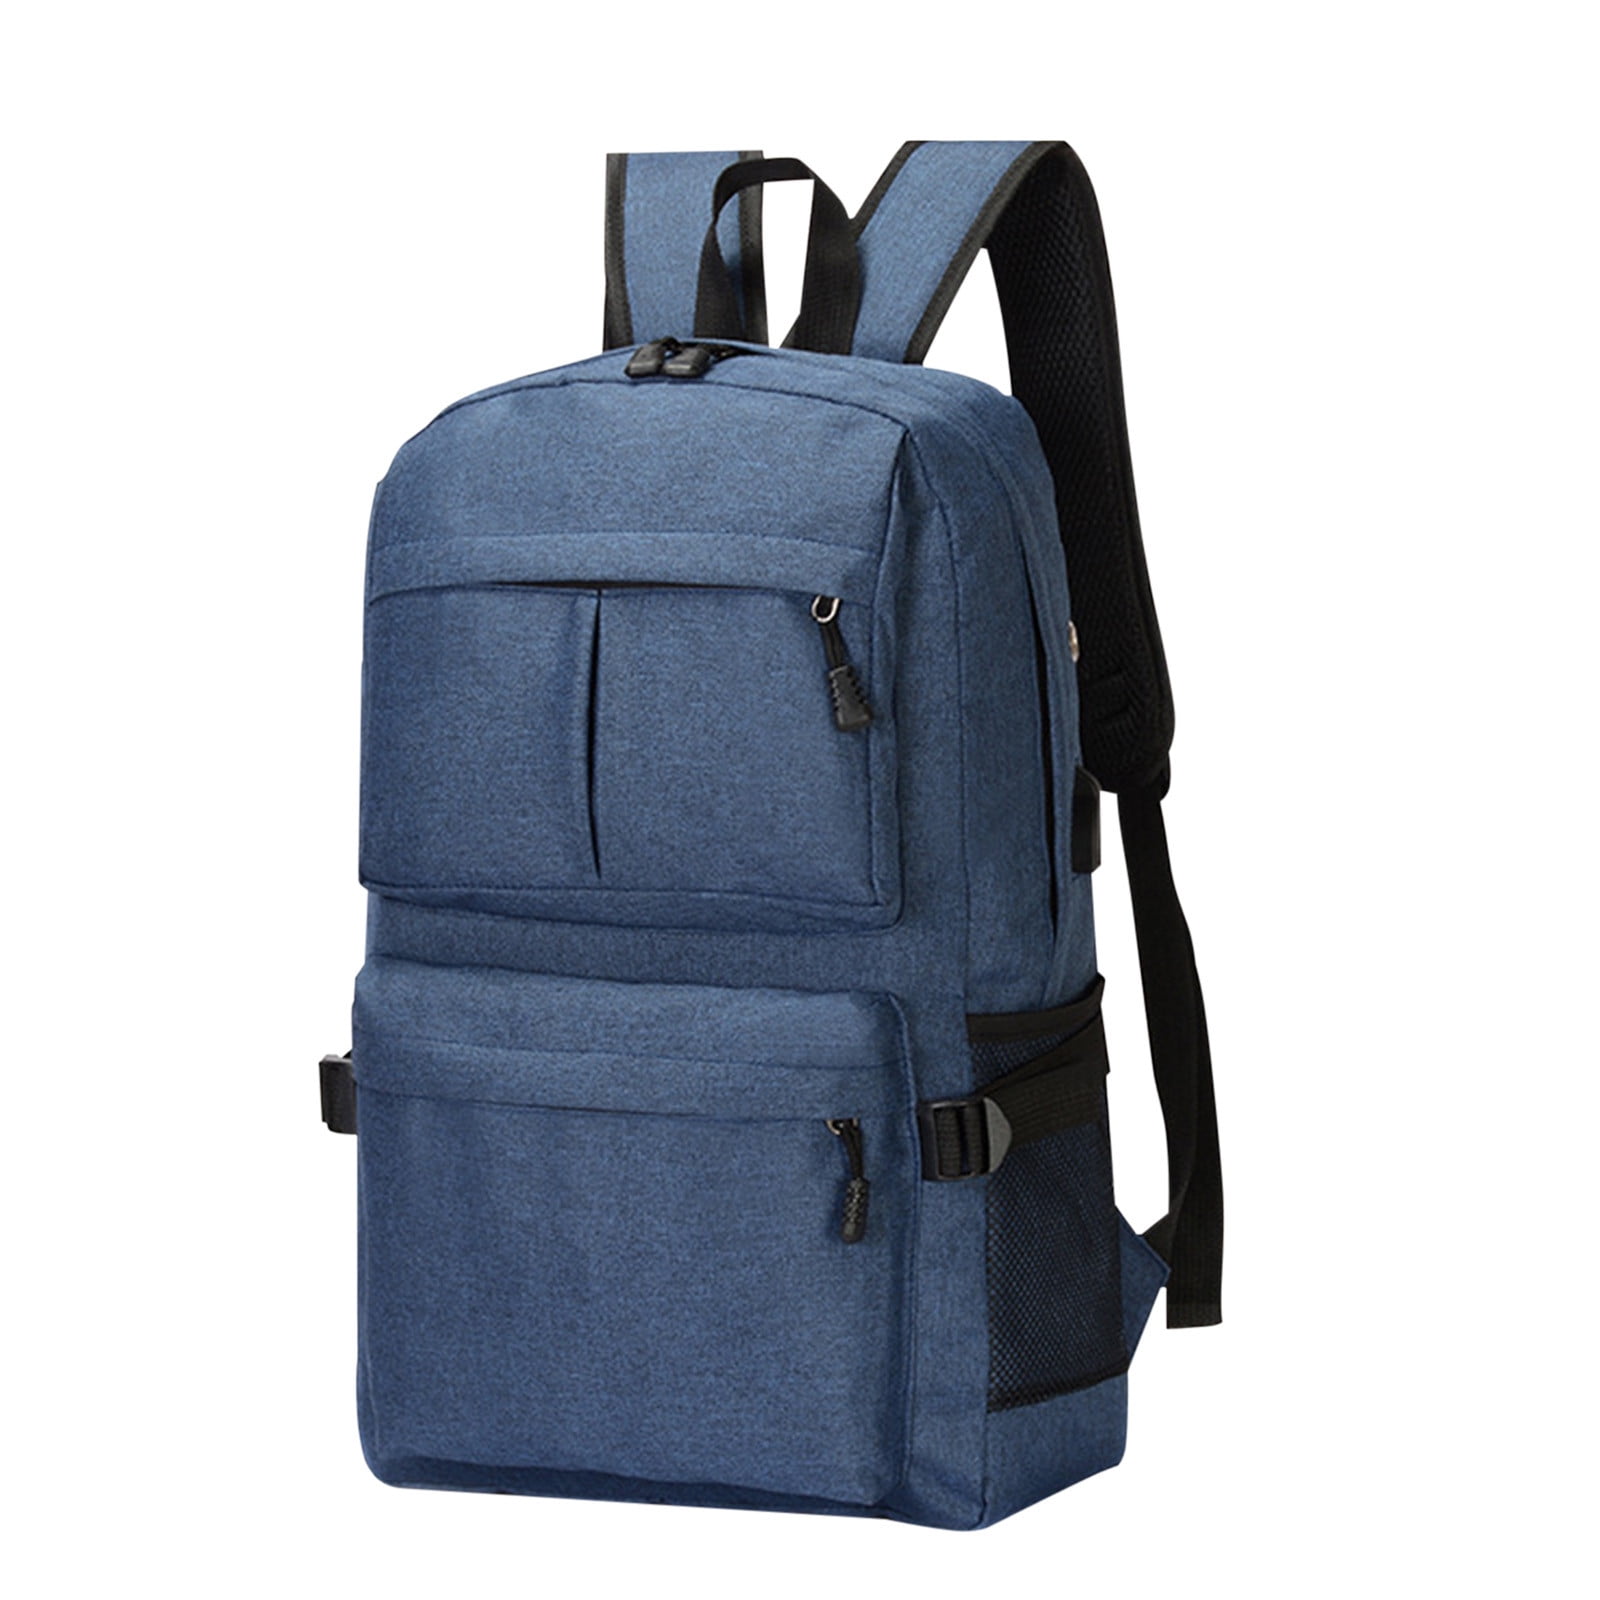 Tuphregyow Travel Laptop Backpack,Large Backpacks Water Resistant ...